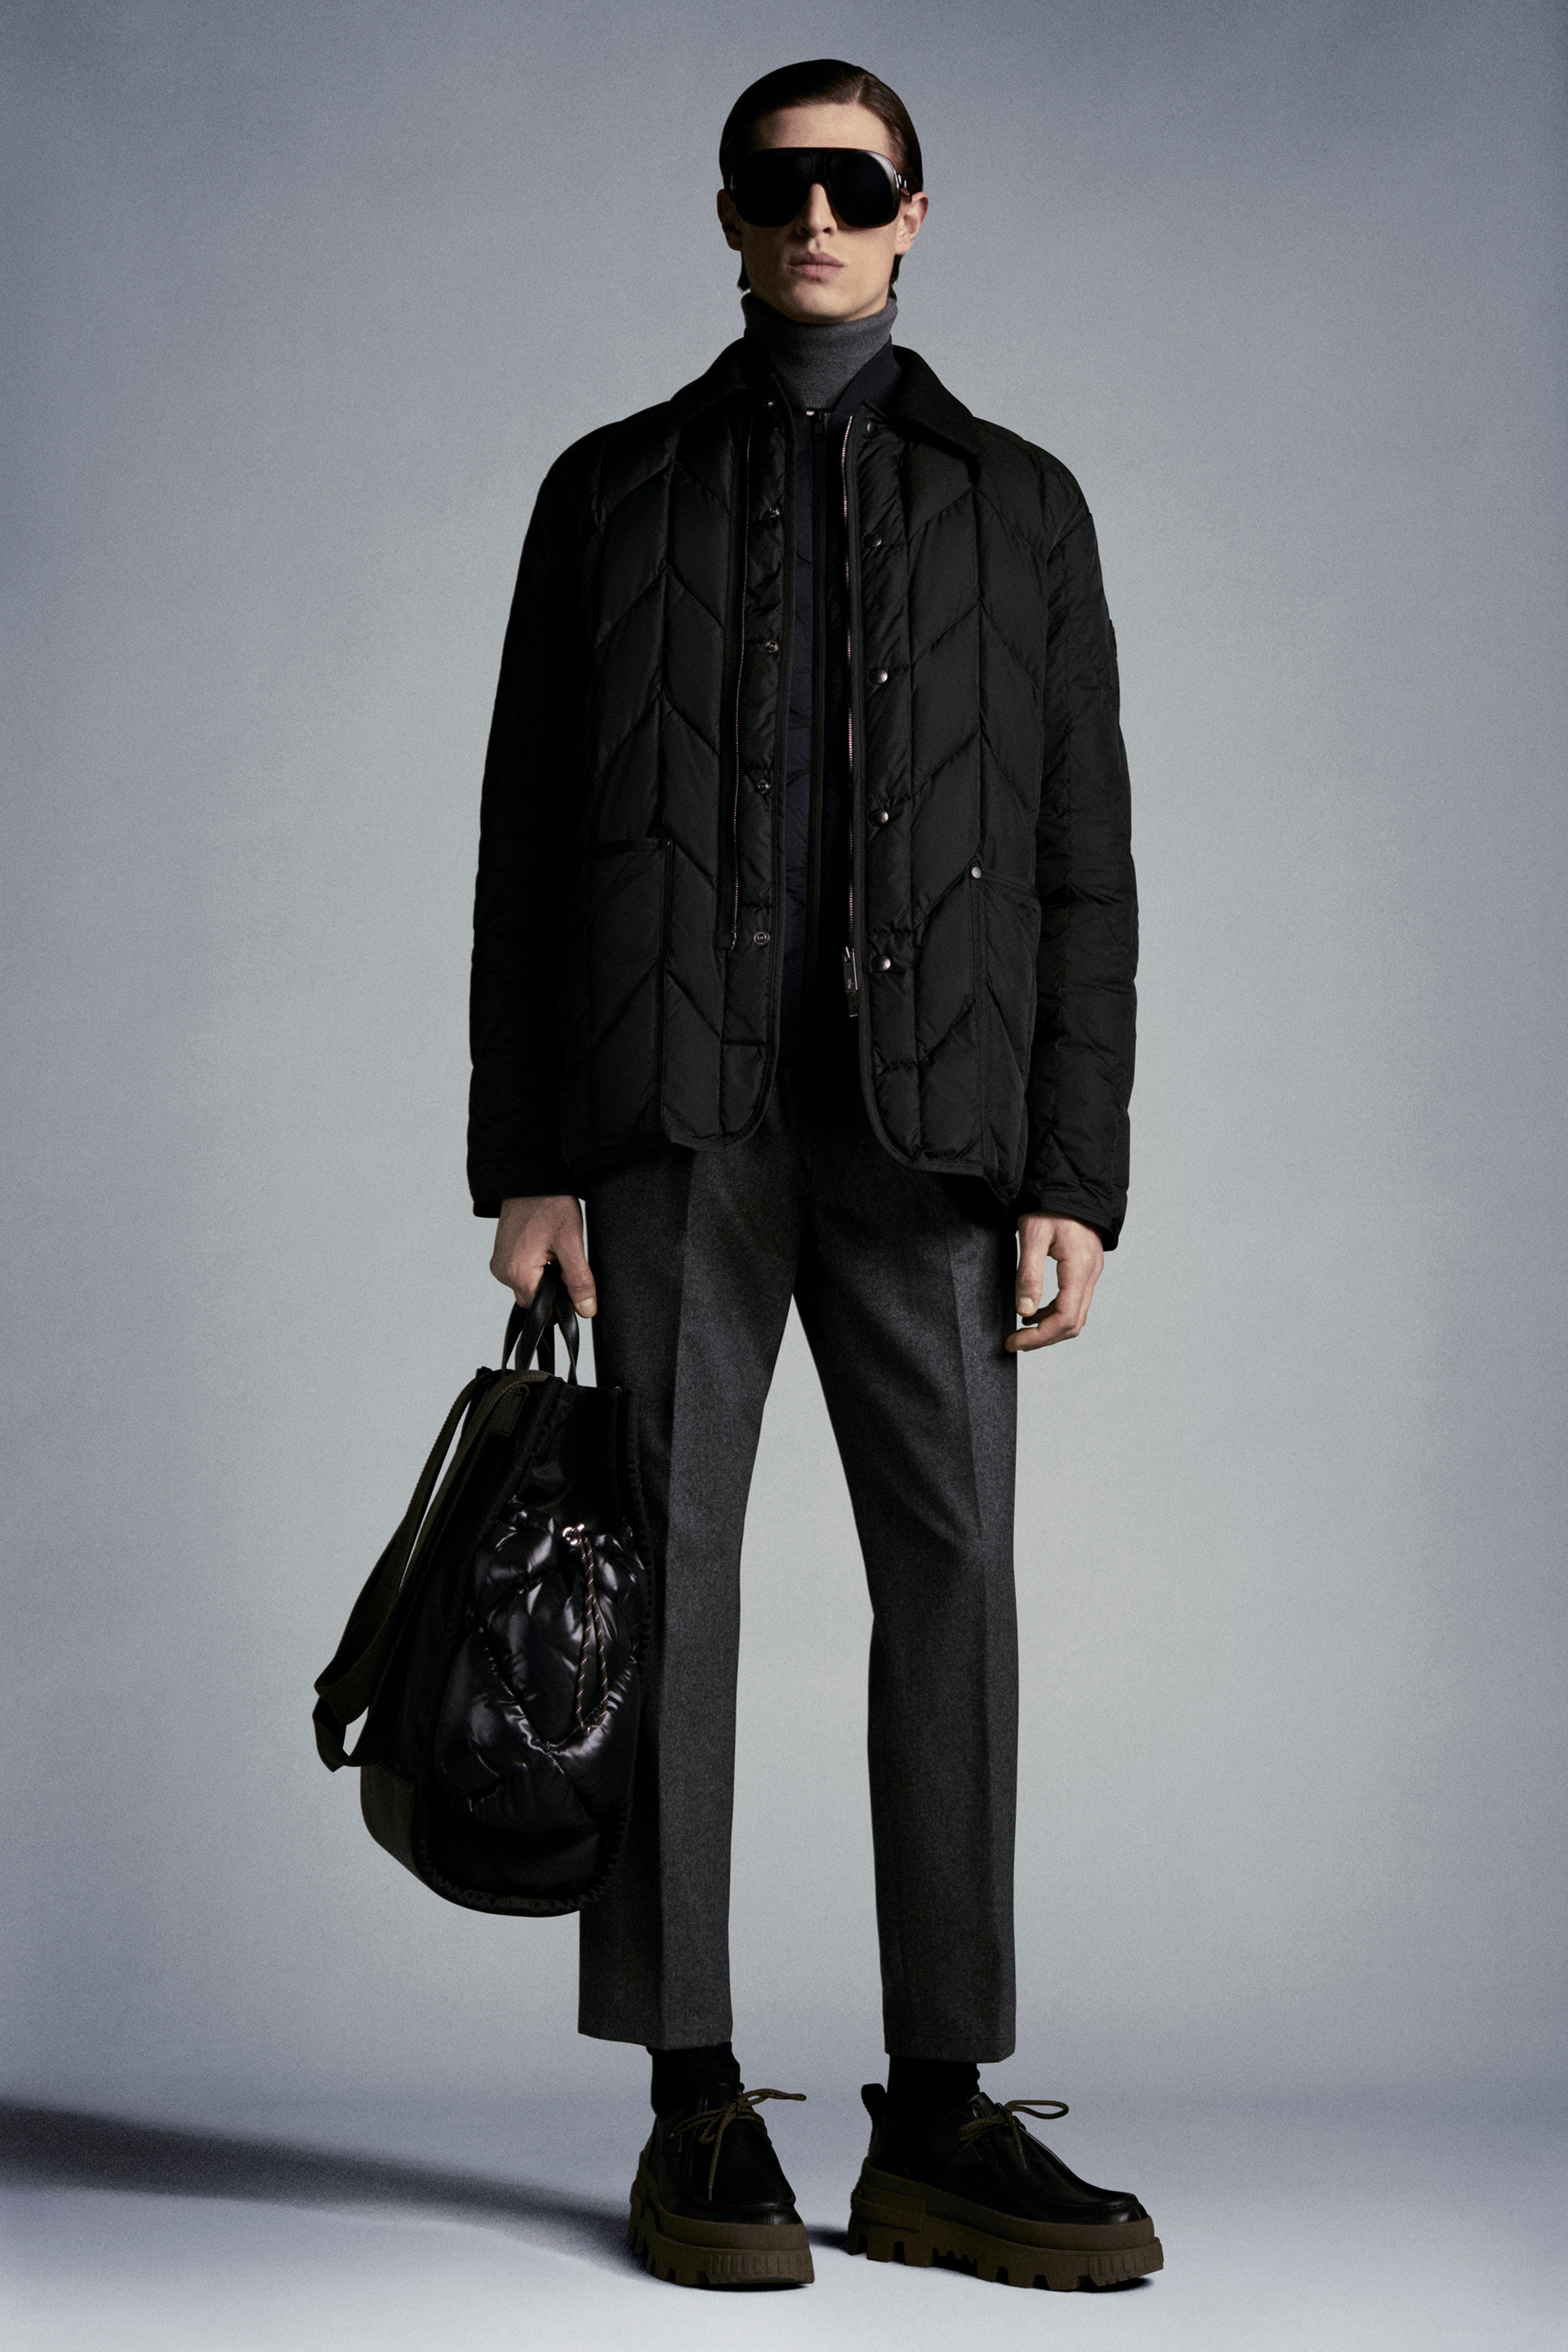 Coats & Jackets for Men - Outerwear | Moncler US